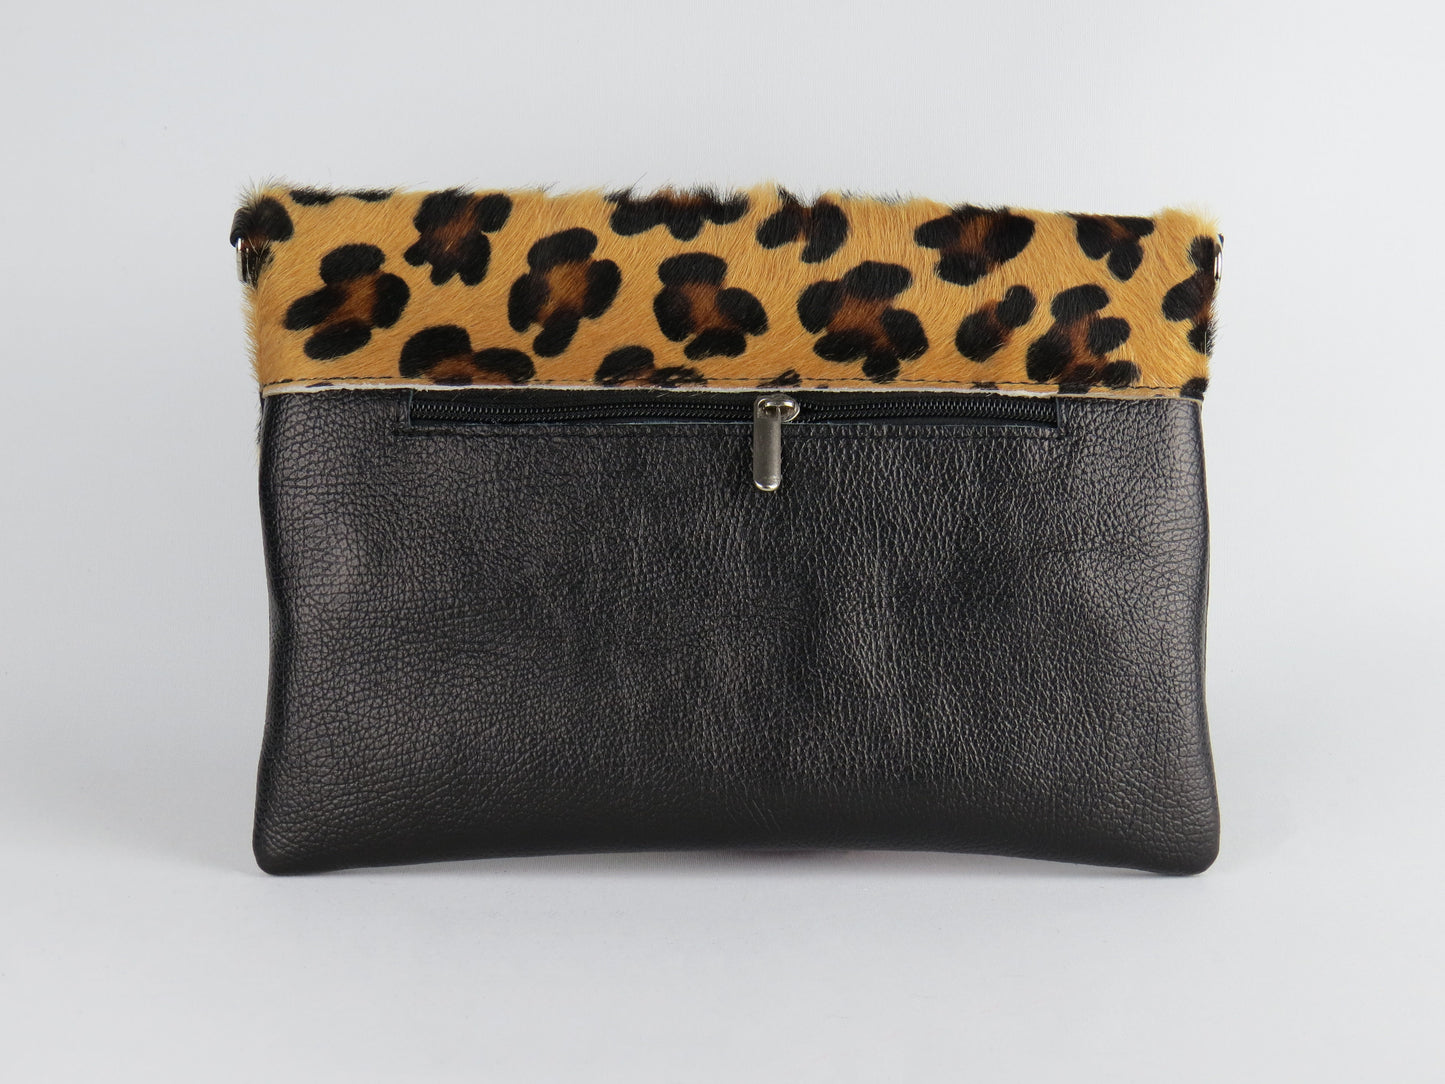 Leopard Print Foldover Clutch Bag